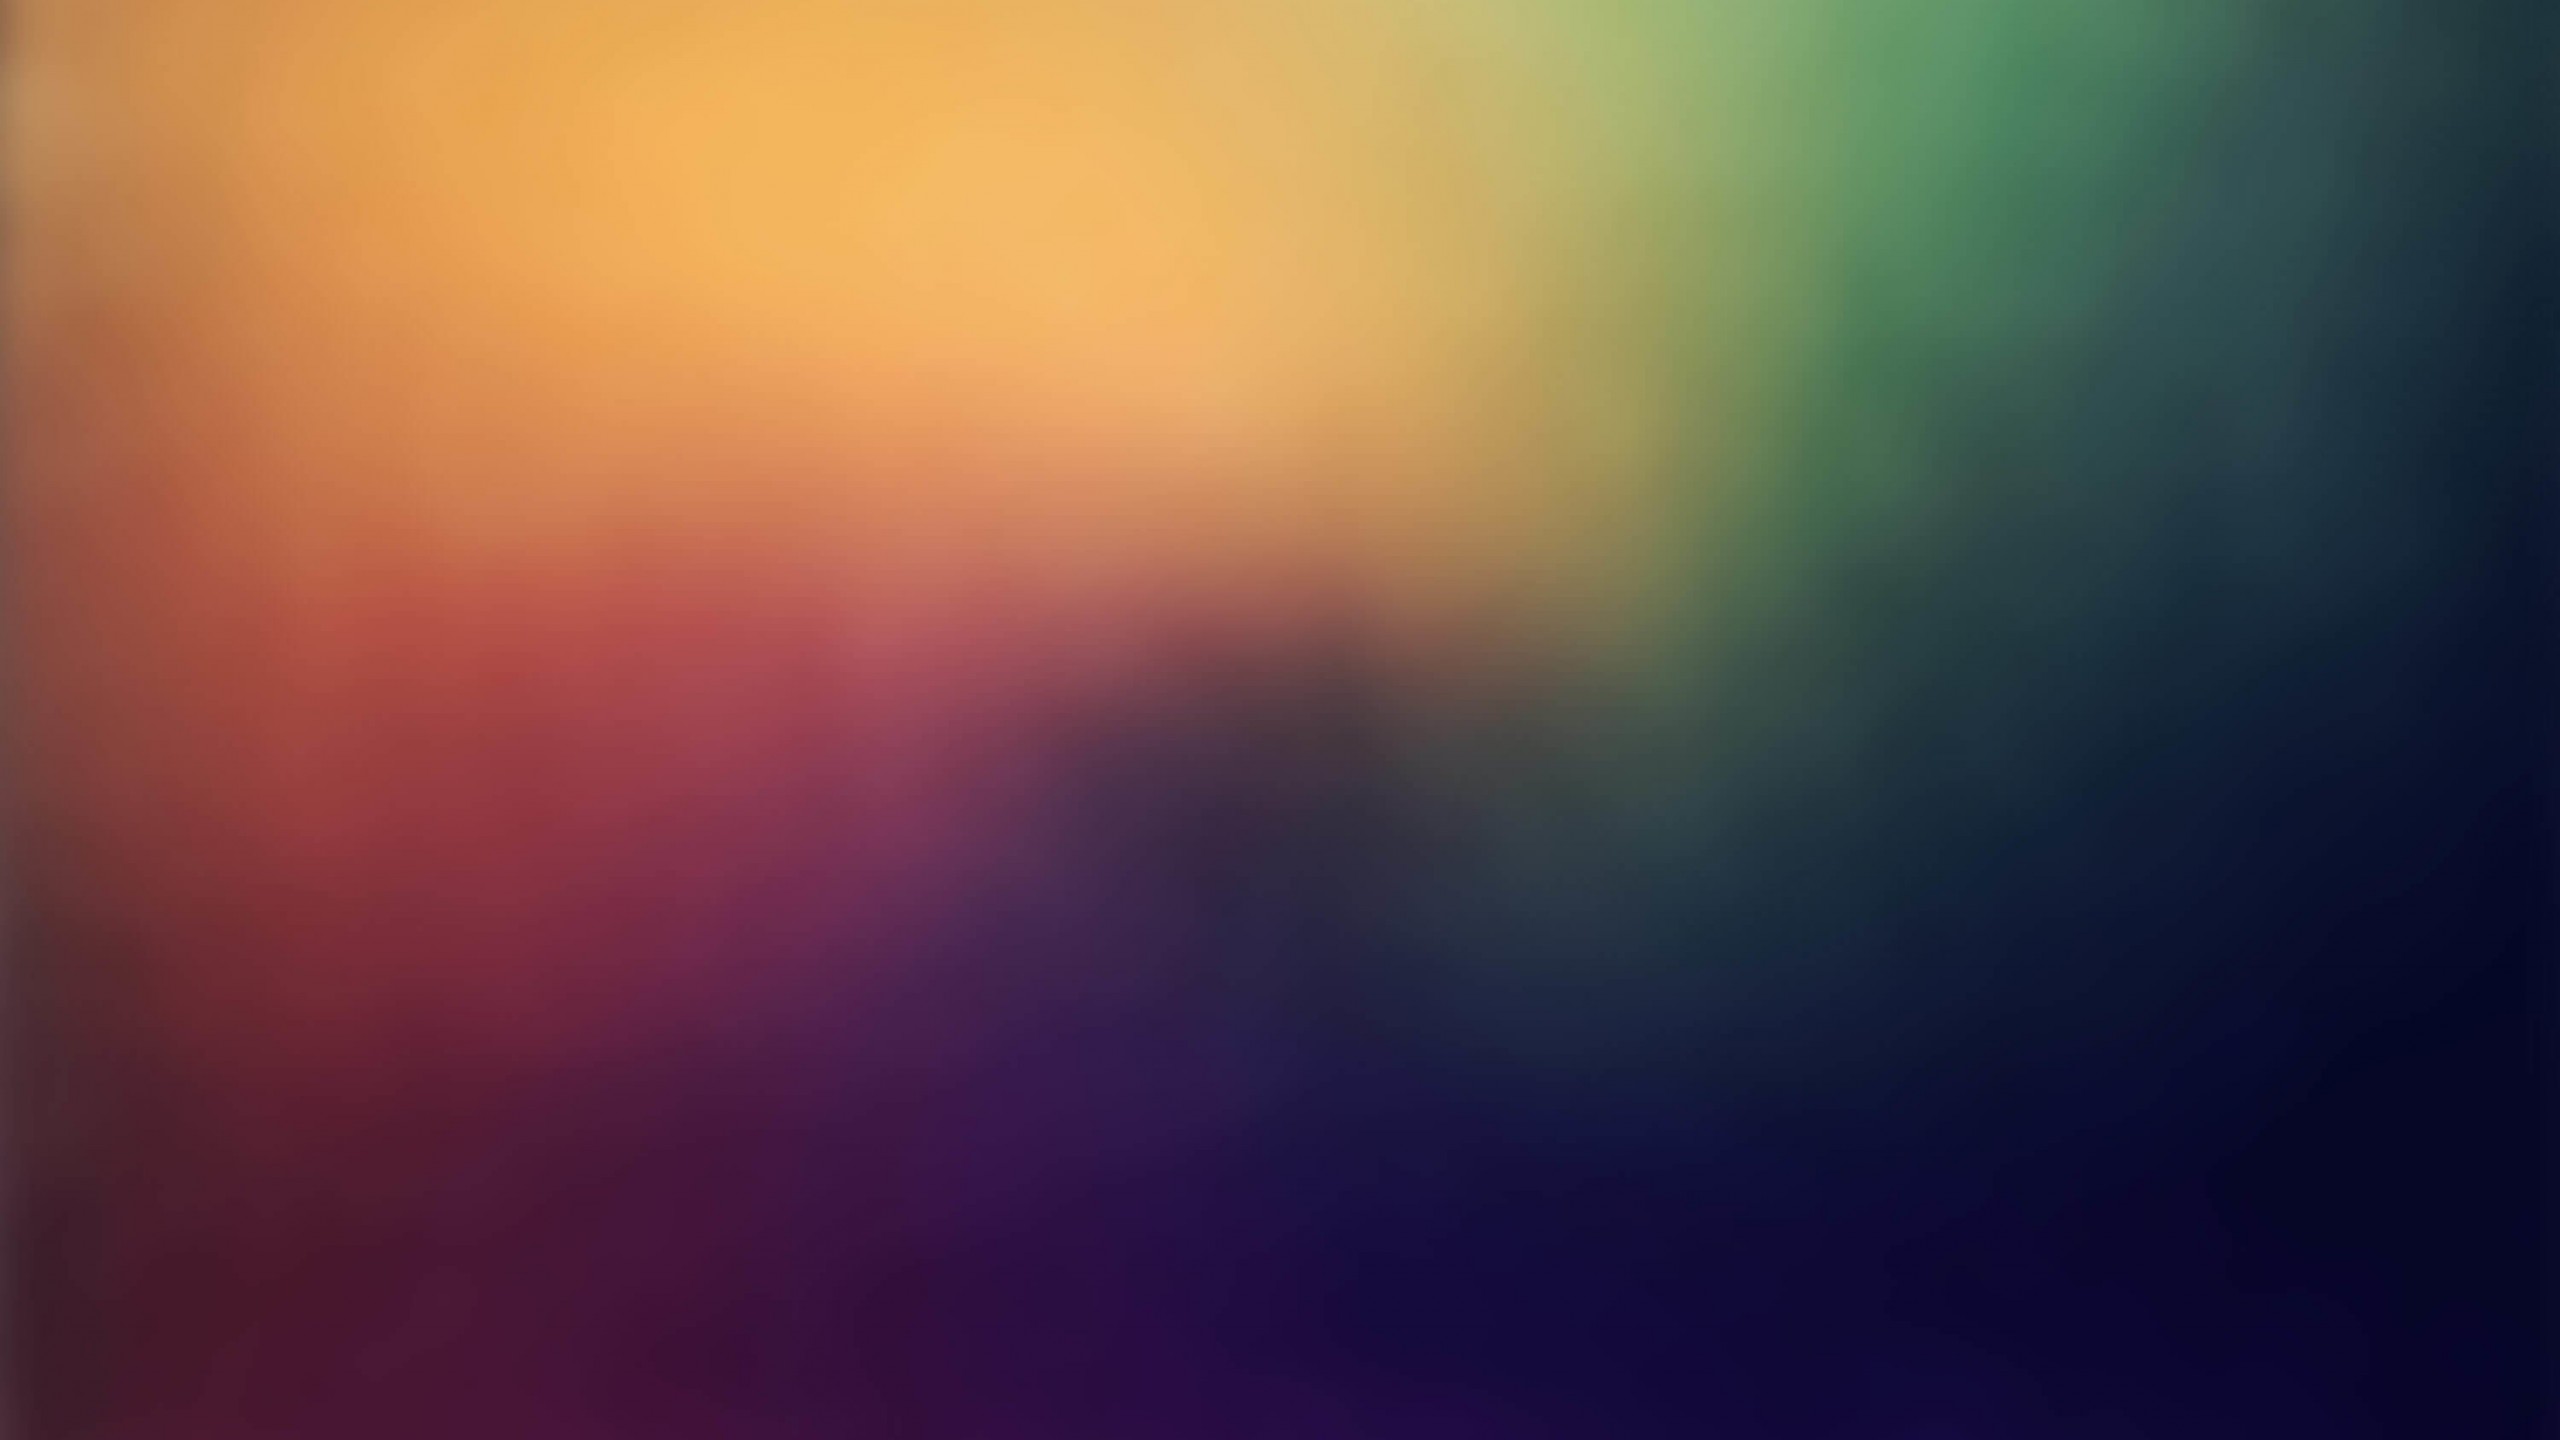 Blurred Rainbow Wallpaper for Social Media YouTube Channel Art